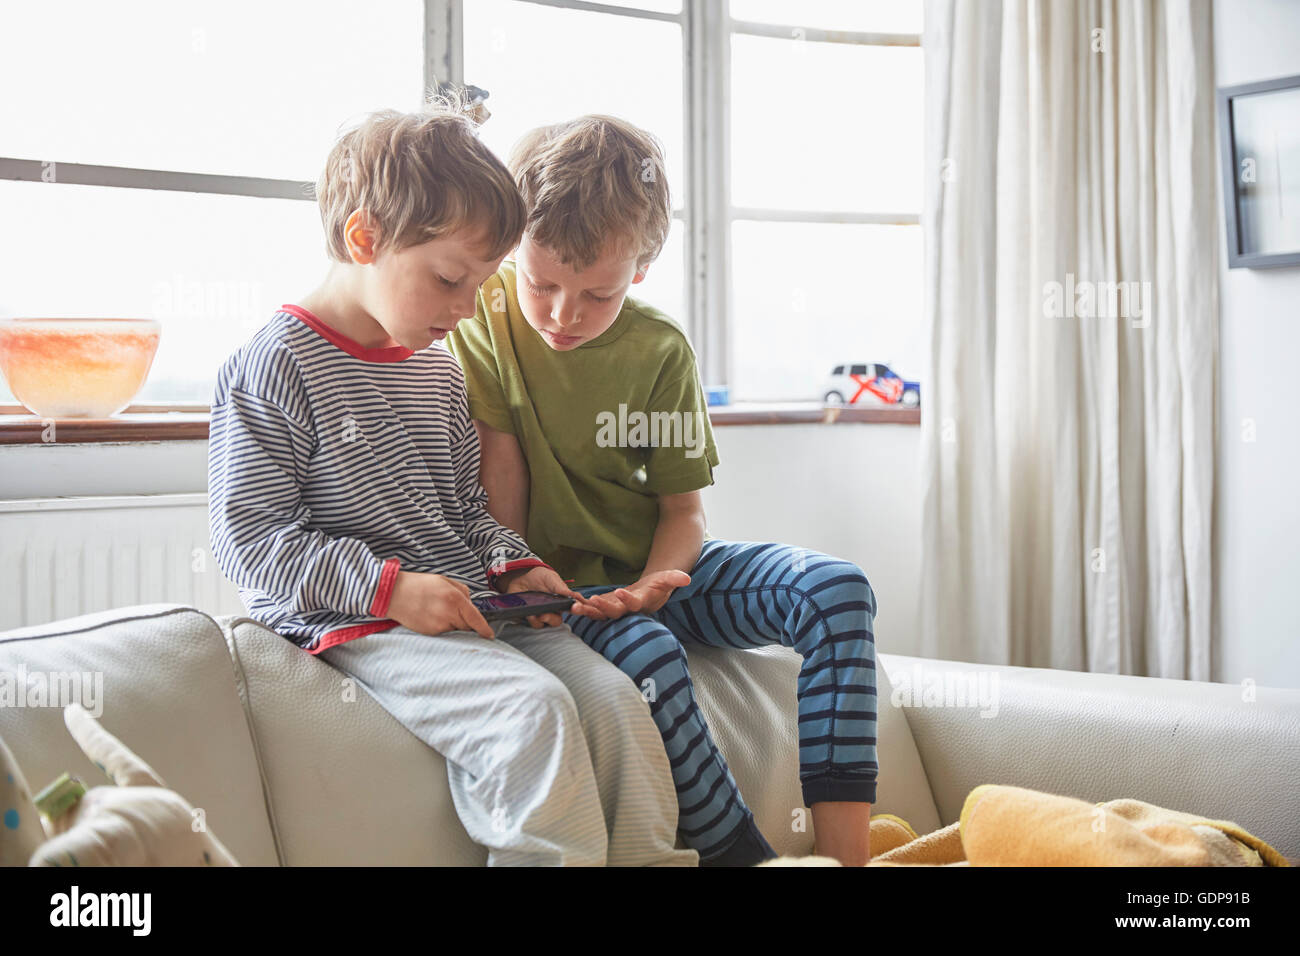 Boys wearing pyjamas sitting on sofa looking at smartphone Stock Photo